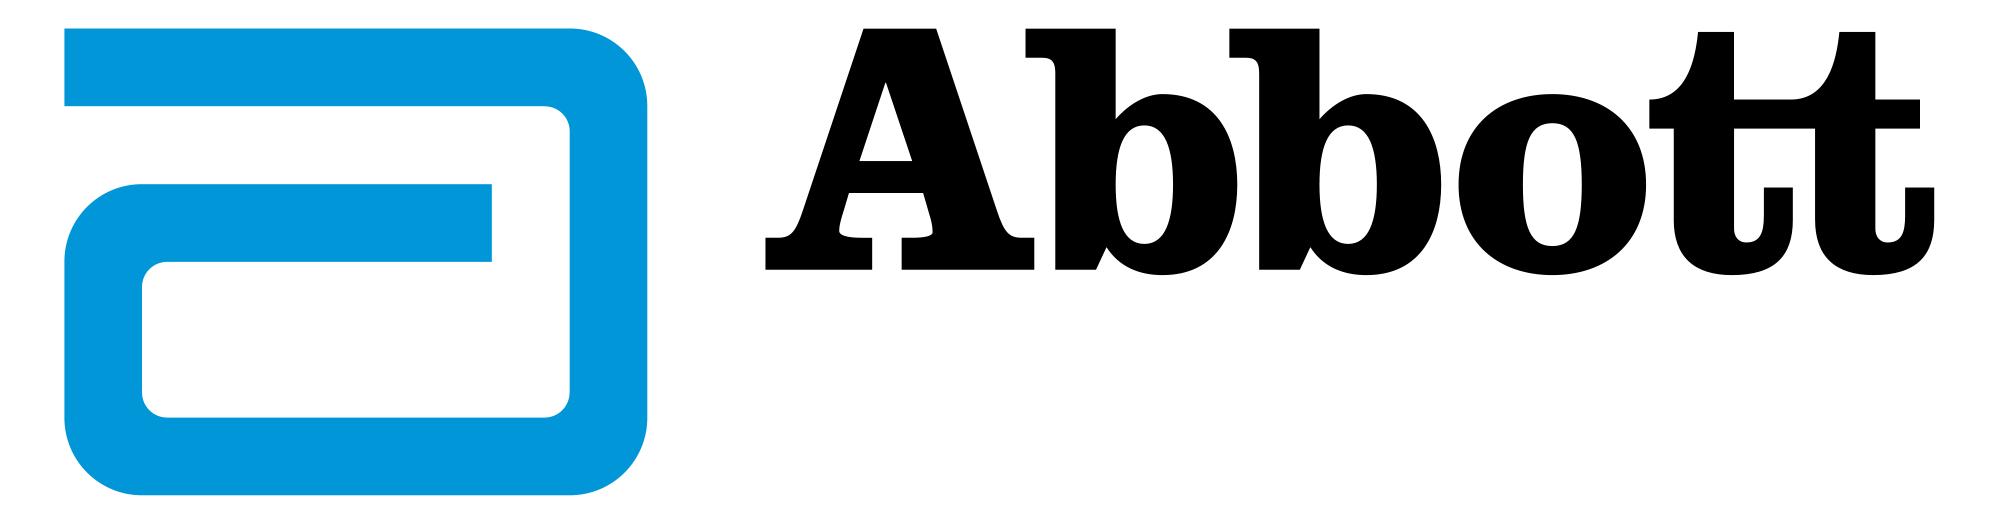 Small STARLIMS Logo